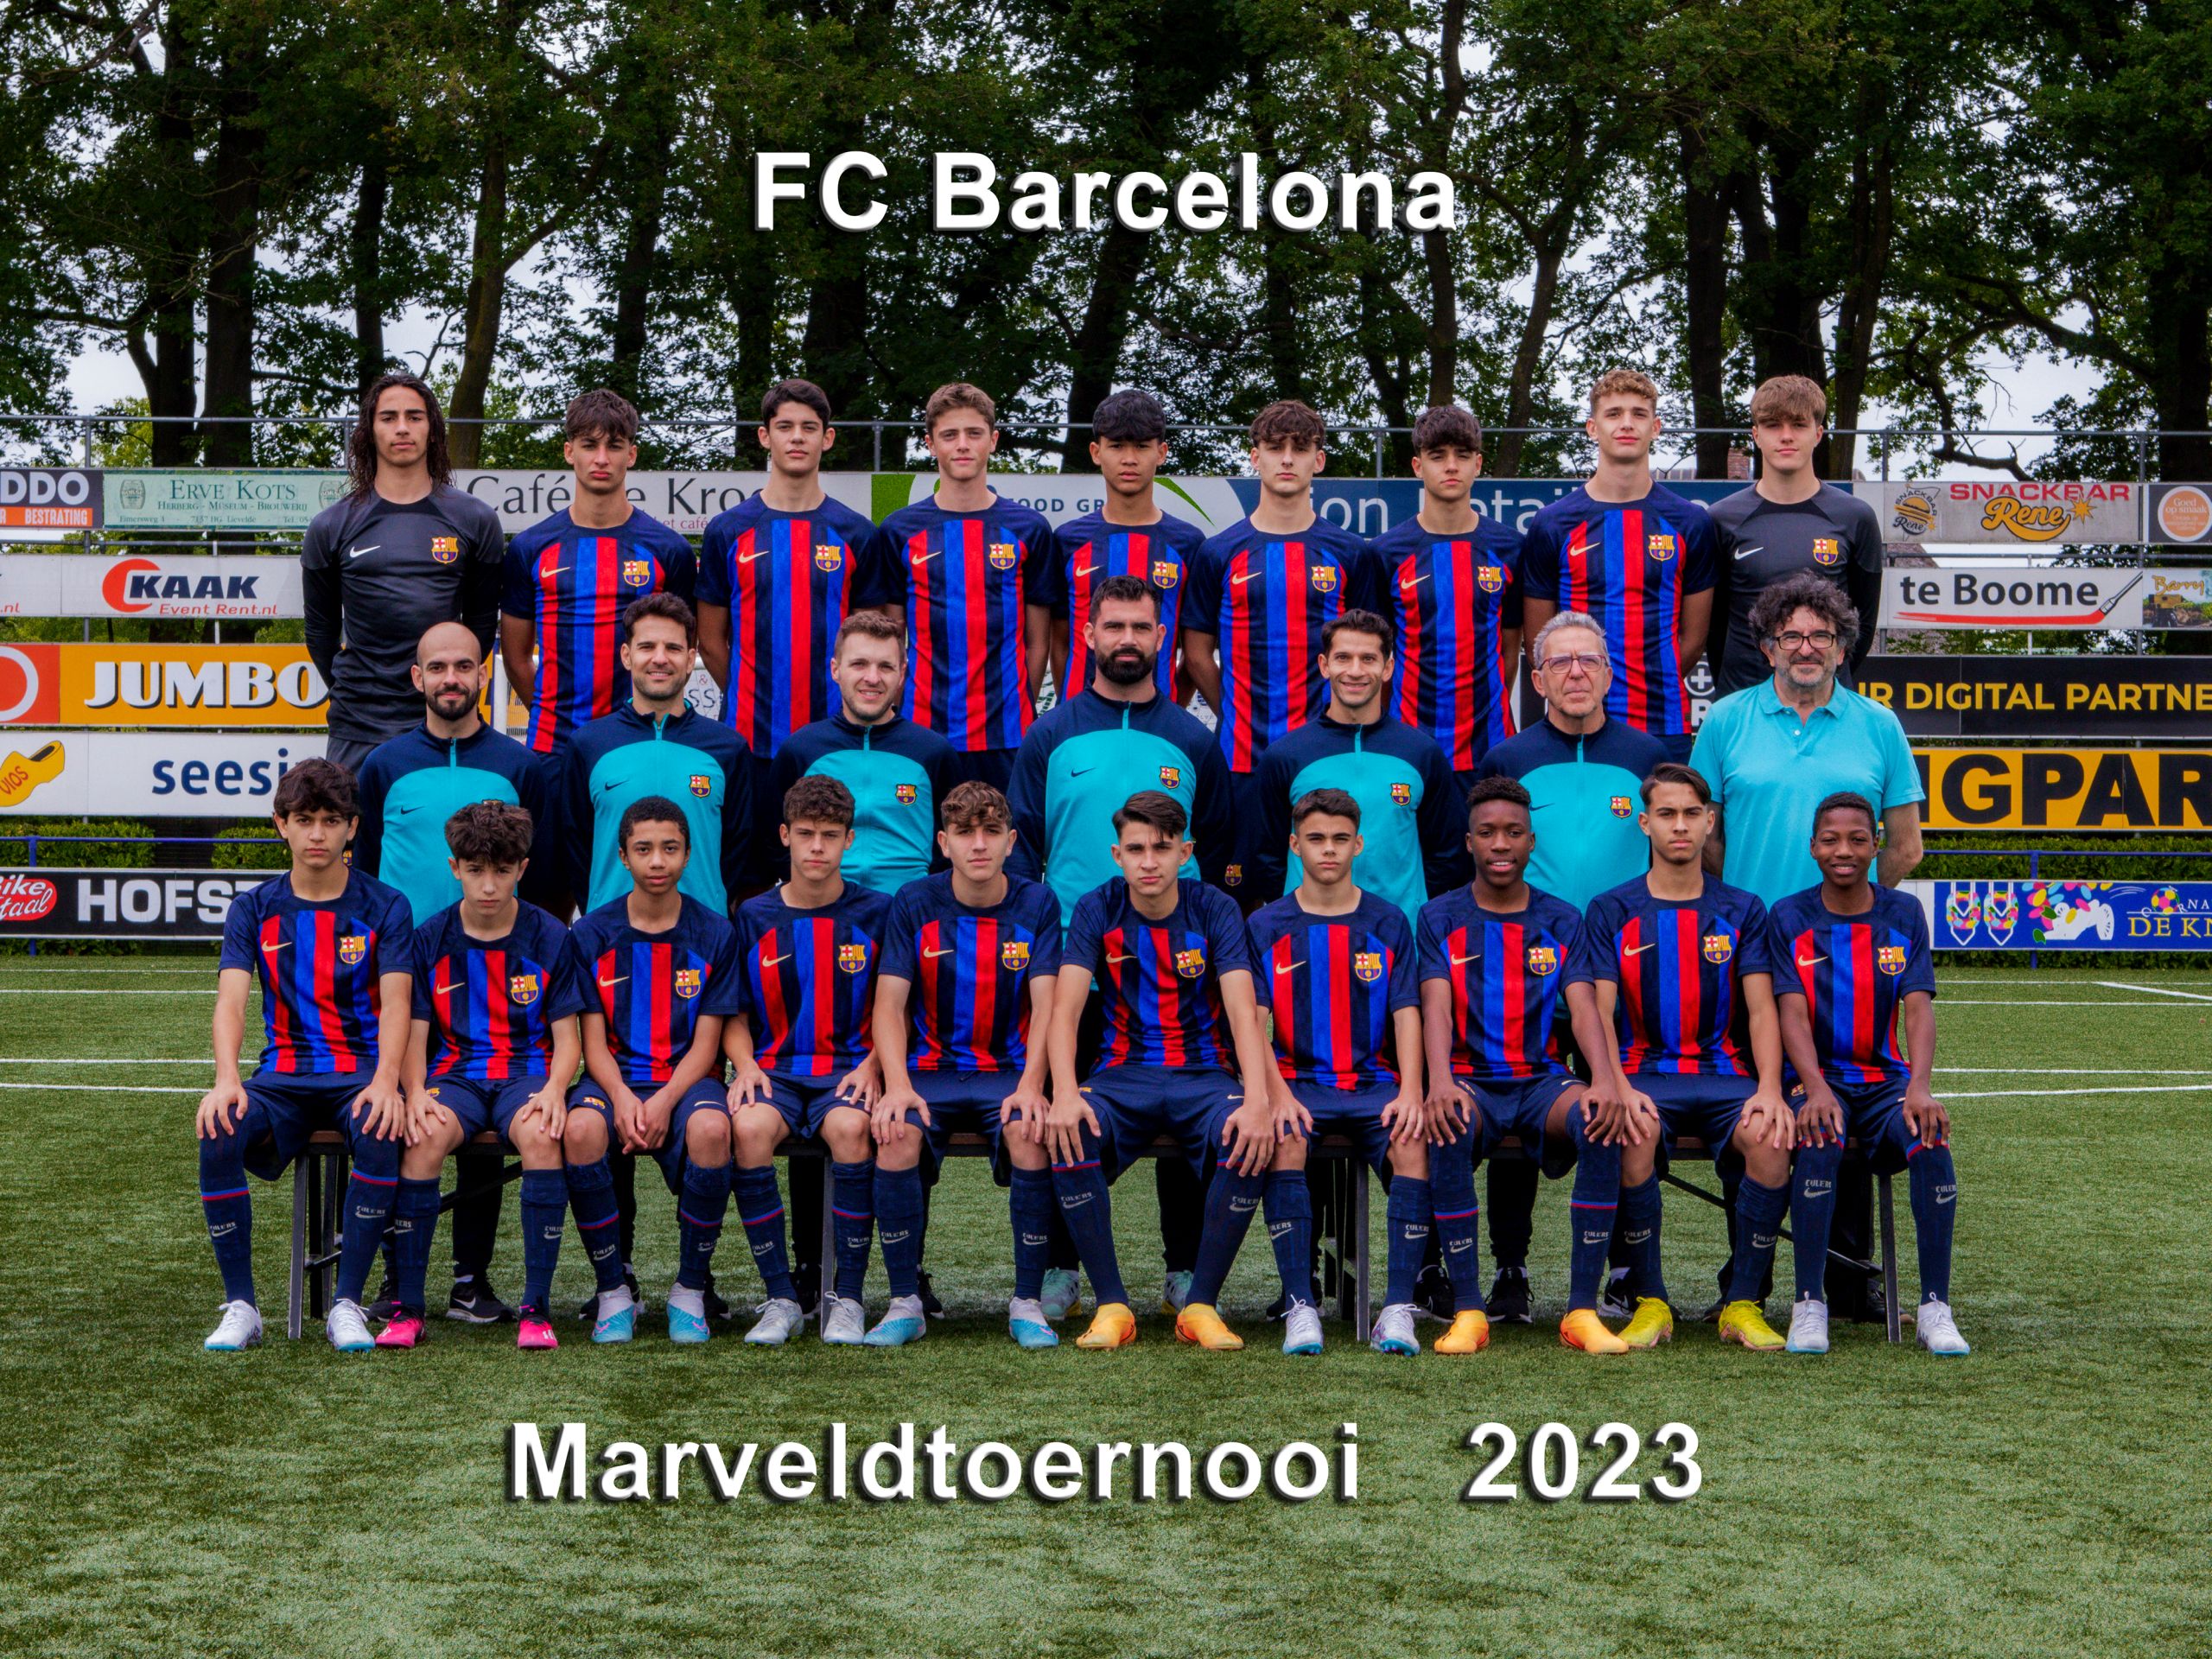 Marveld Tournament 2023 - Team FC Barcelona